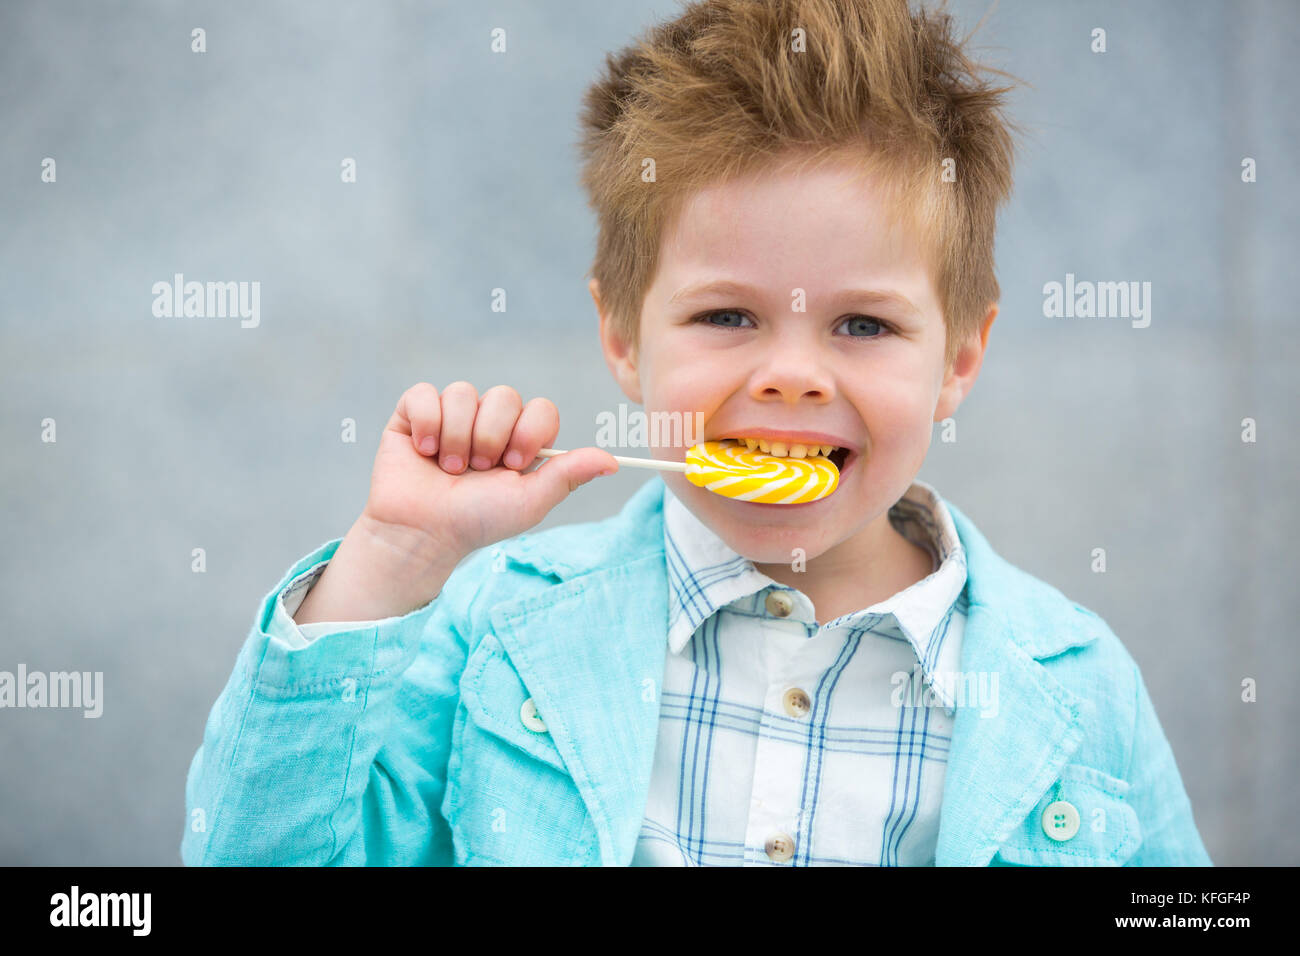 Fashion kid with lollipop near gray wall Stock Photo